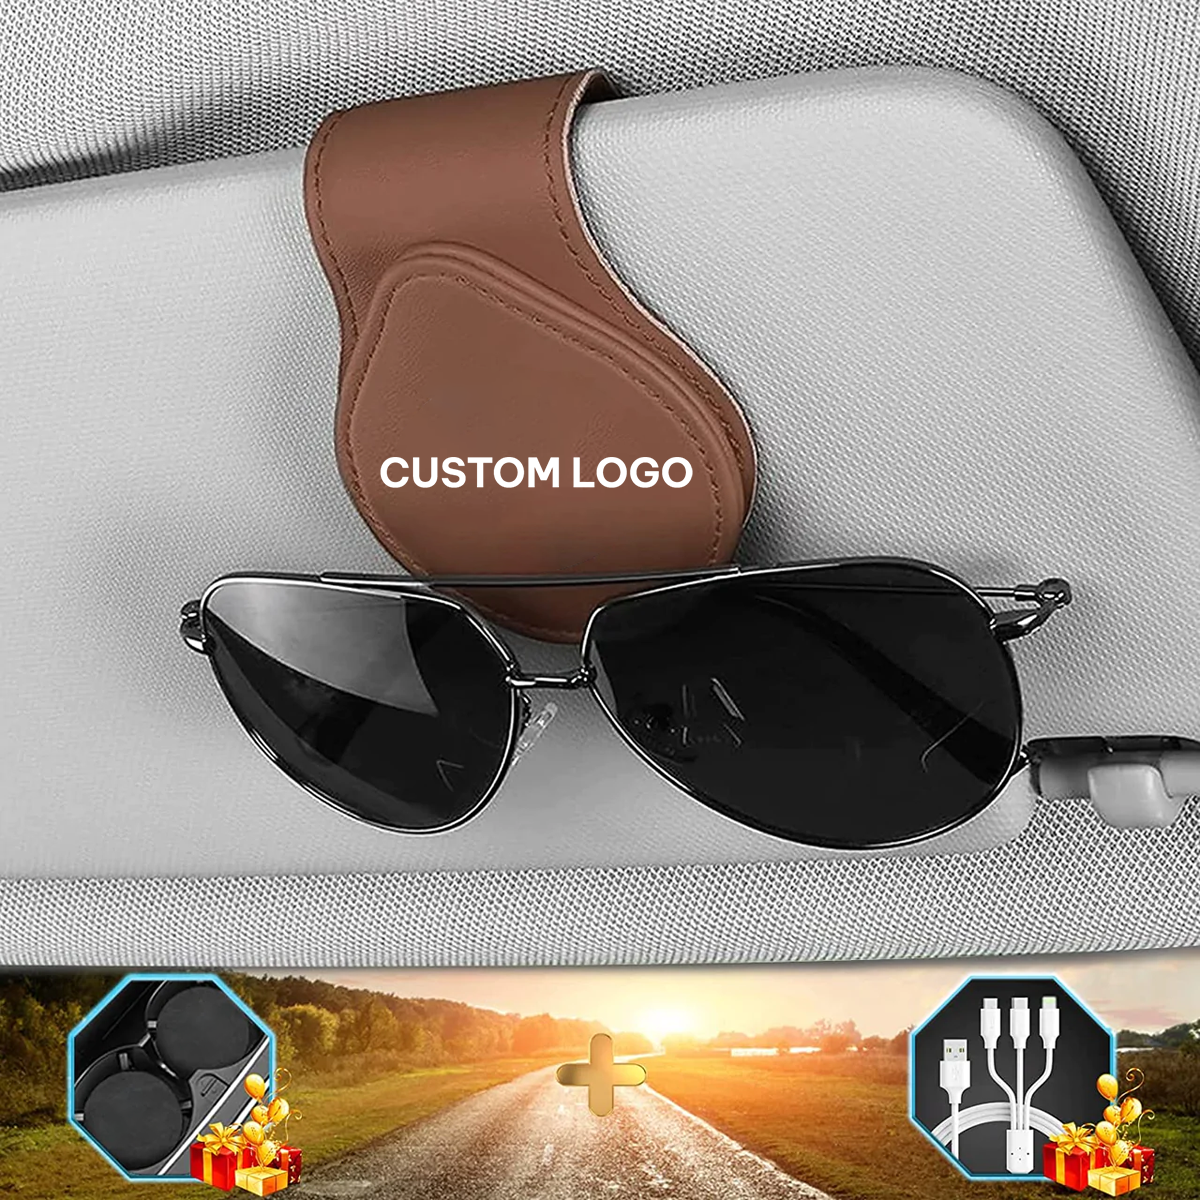 Two-Tone Black Malibu Sunglasses - Progress Promotional Products